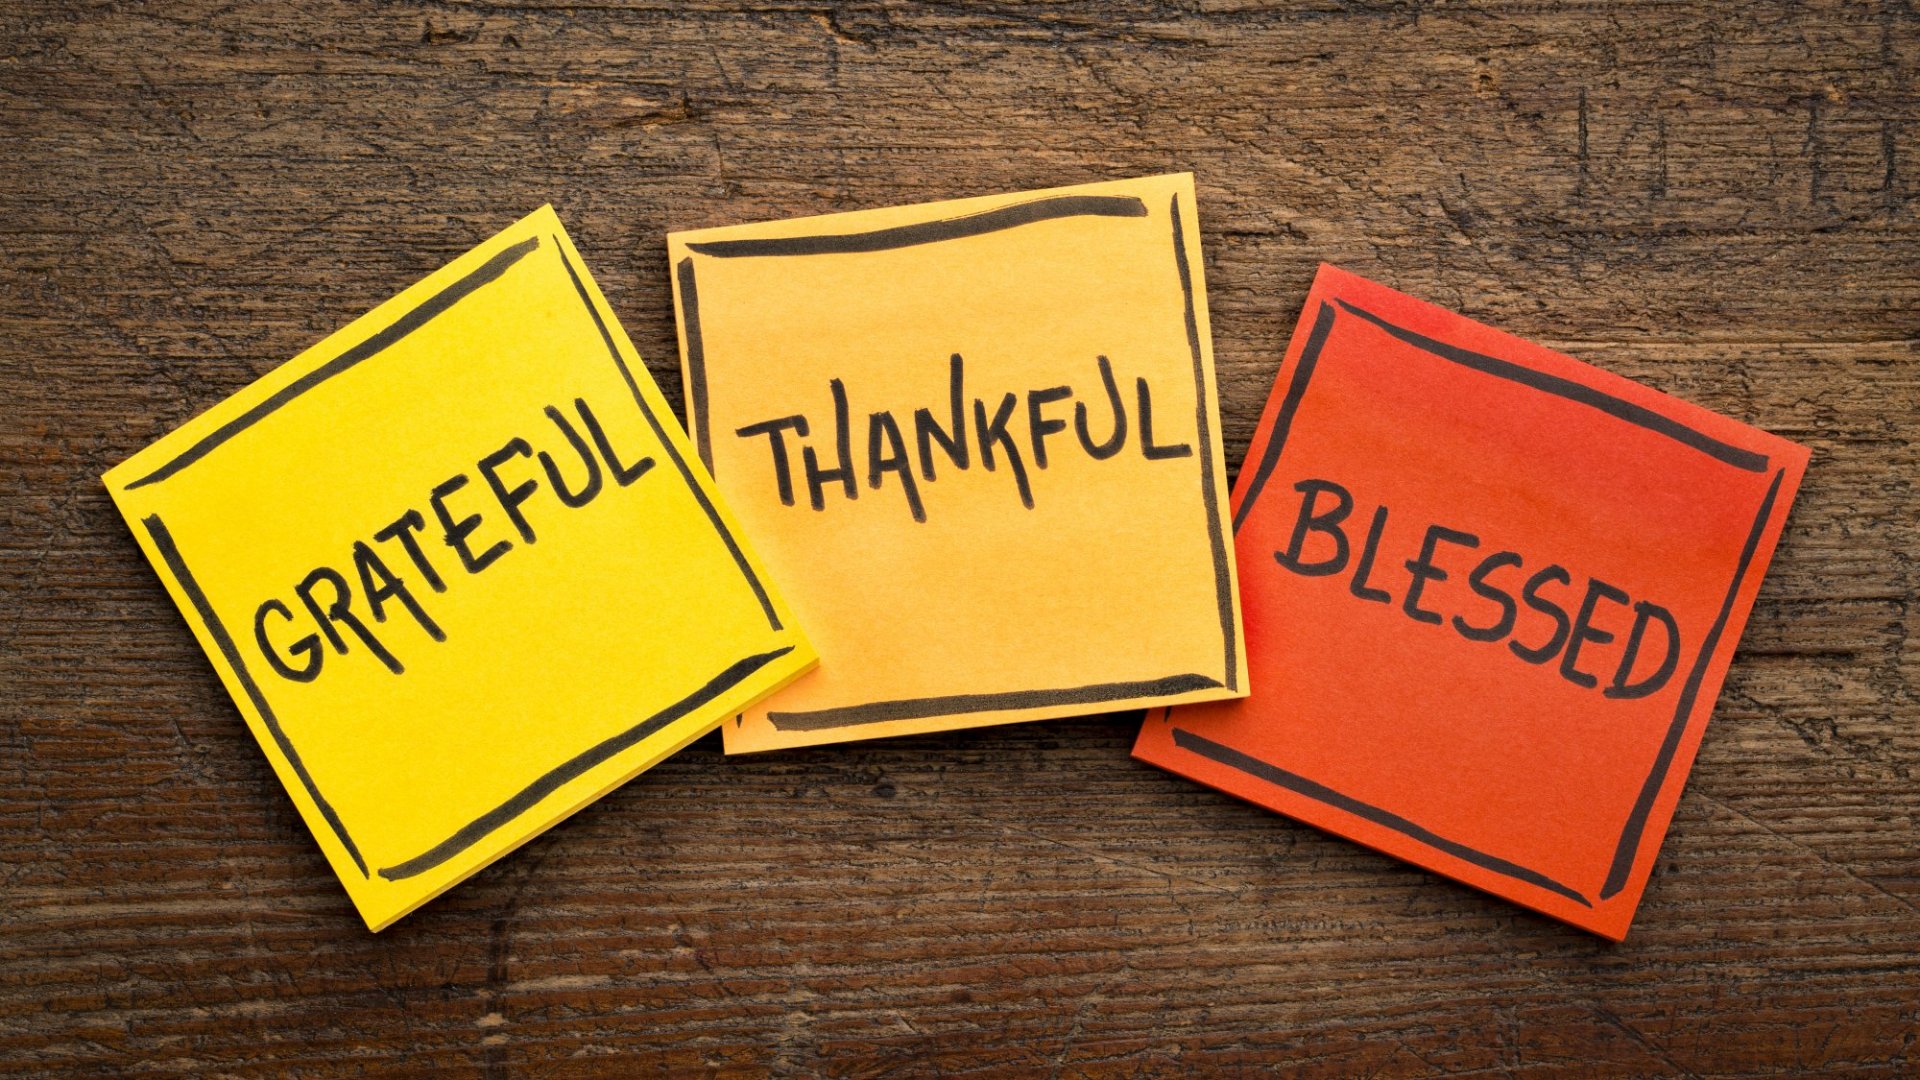 teaching kids gratitude